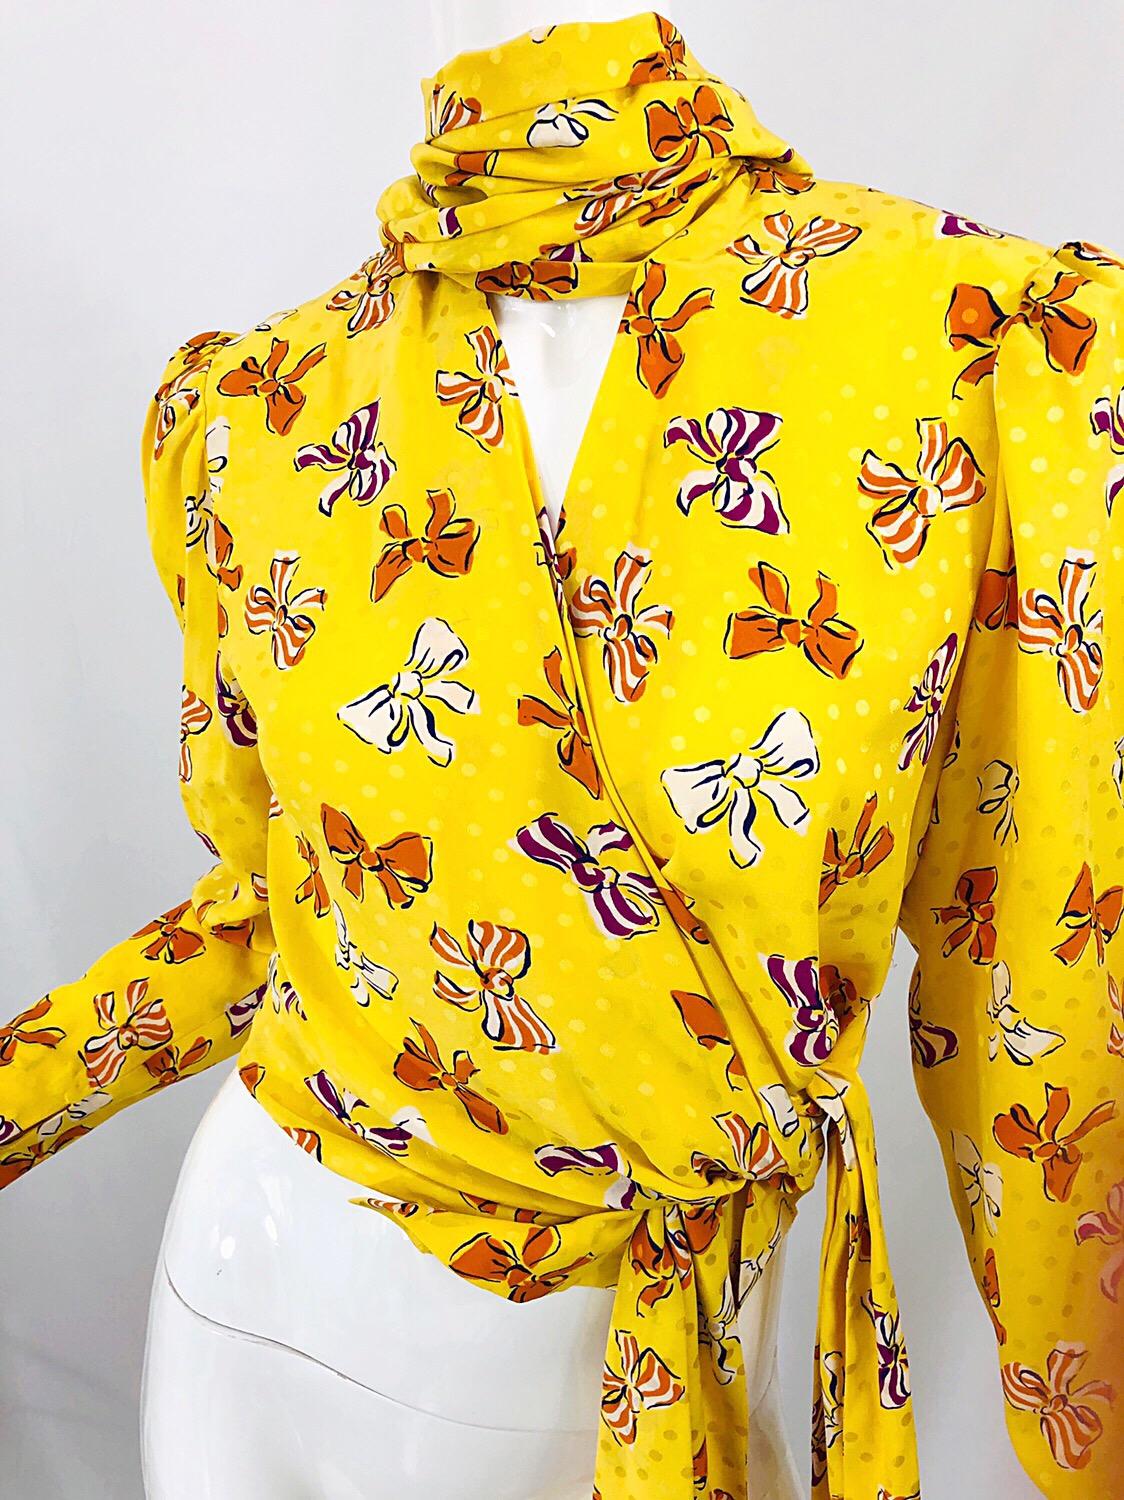 Yves Saint Laurent SS 1987 Runway YSL Yellow Bow Print Silk Blouse + Skirt Dress For Sale 7